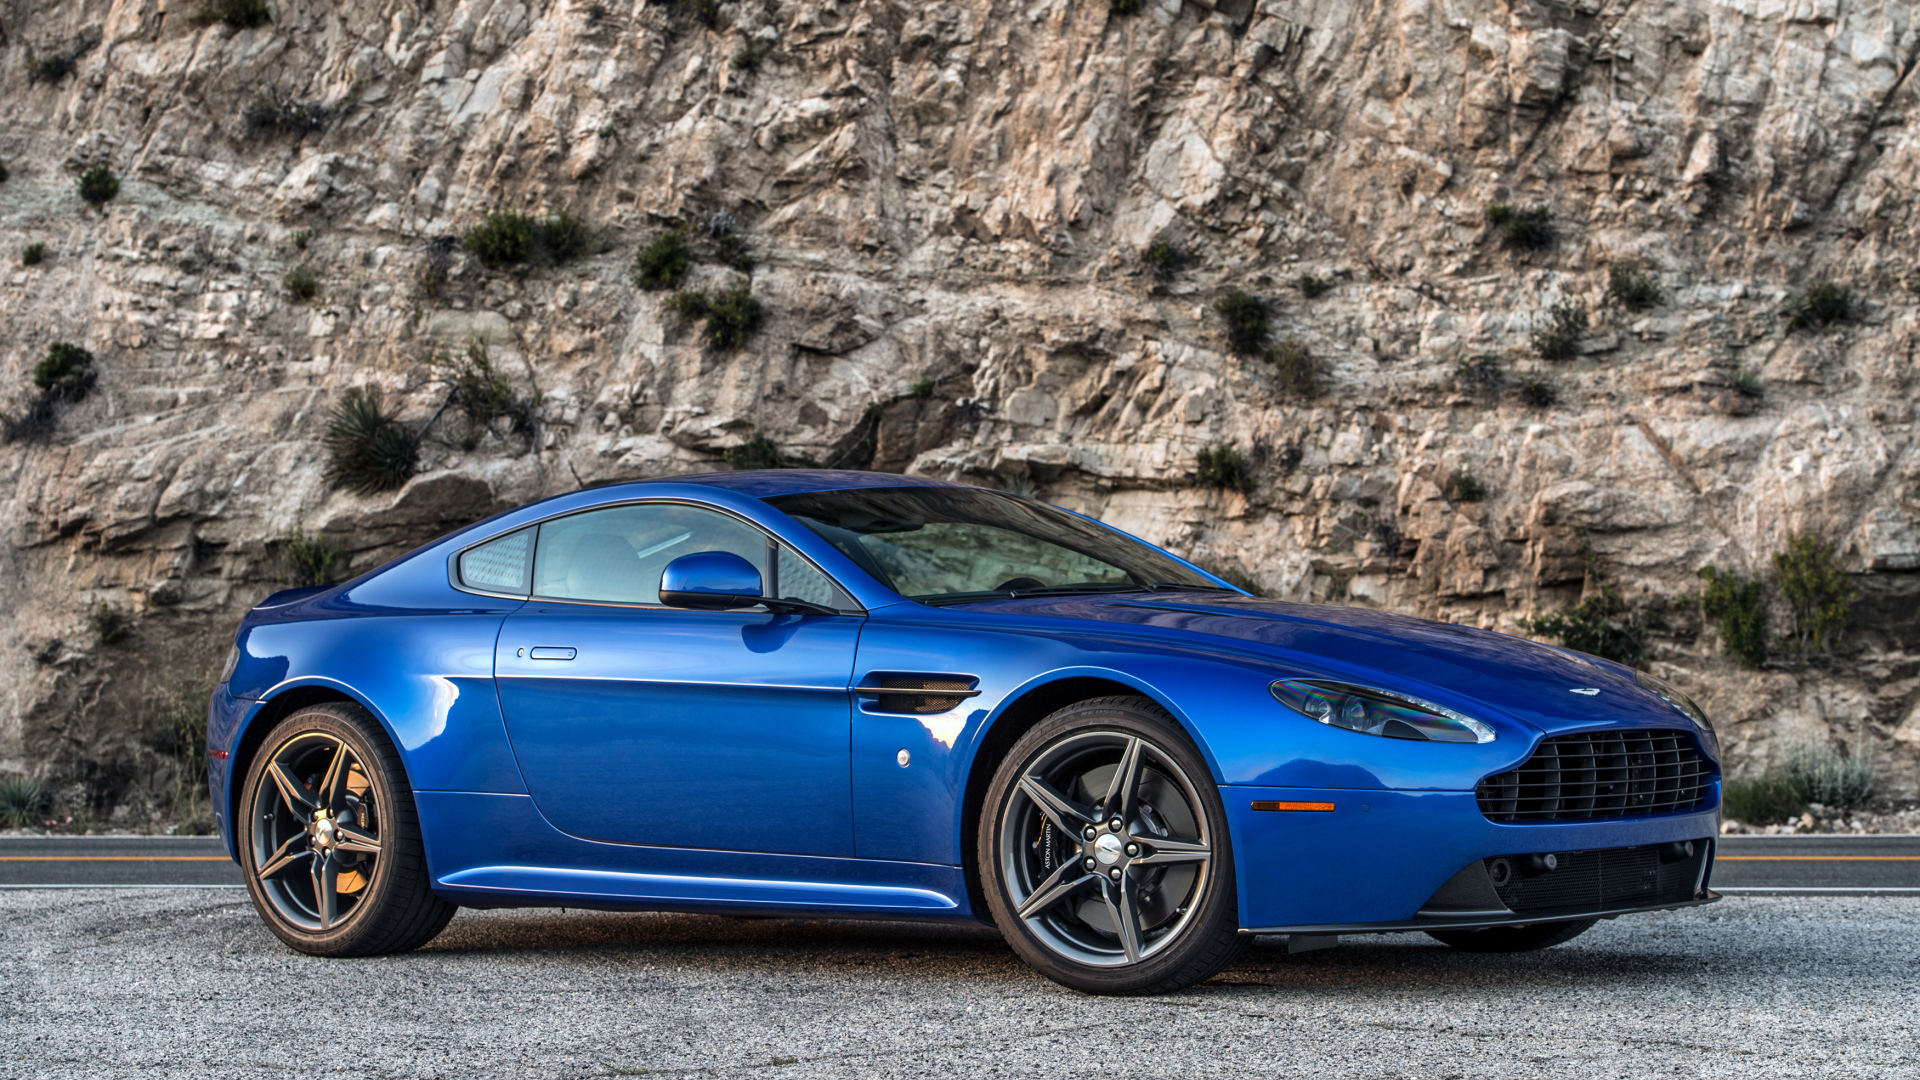 Автомобиль Aston Martin V8 Vantage GTS, 2017 года цвета синий металлик 